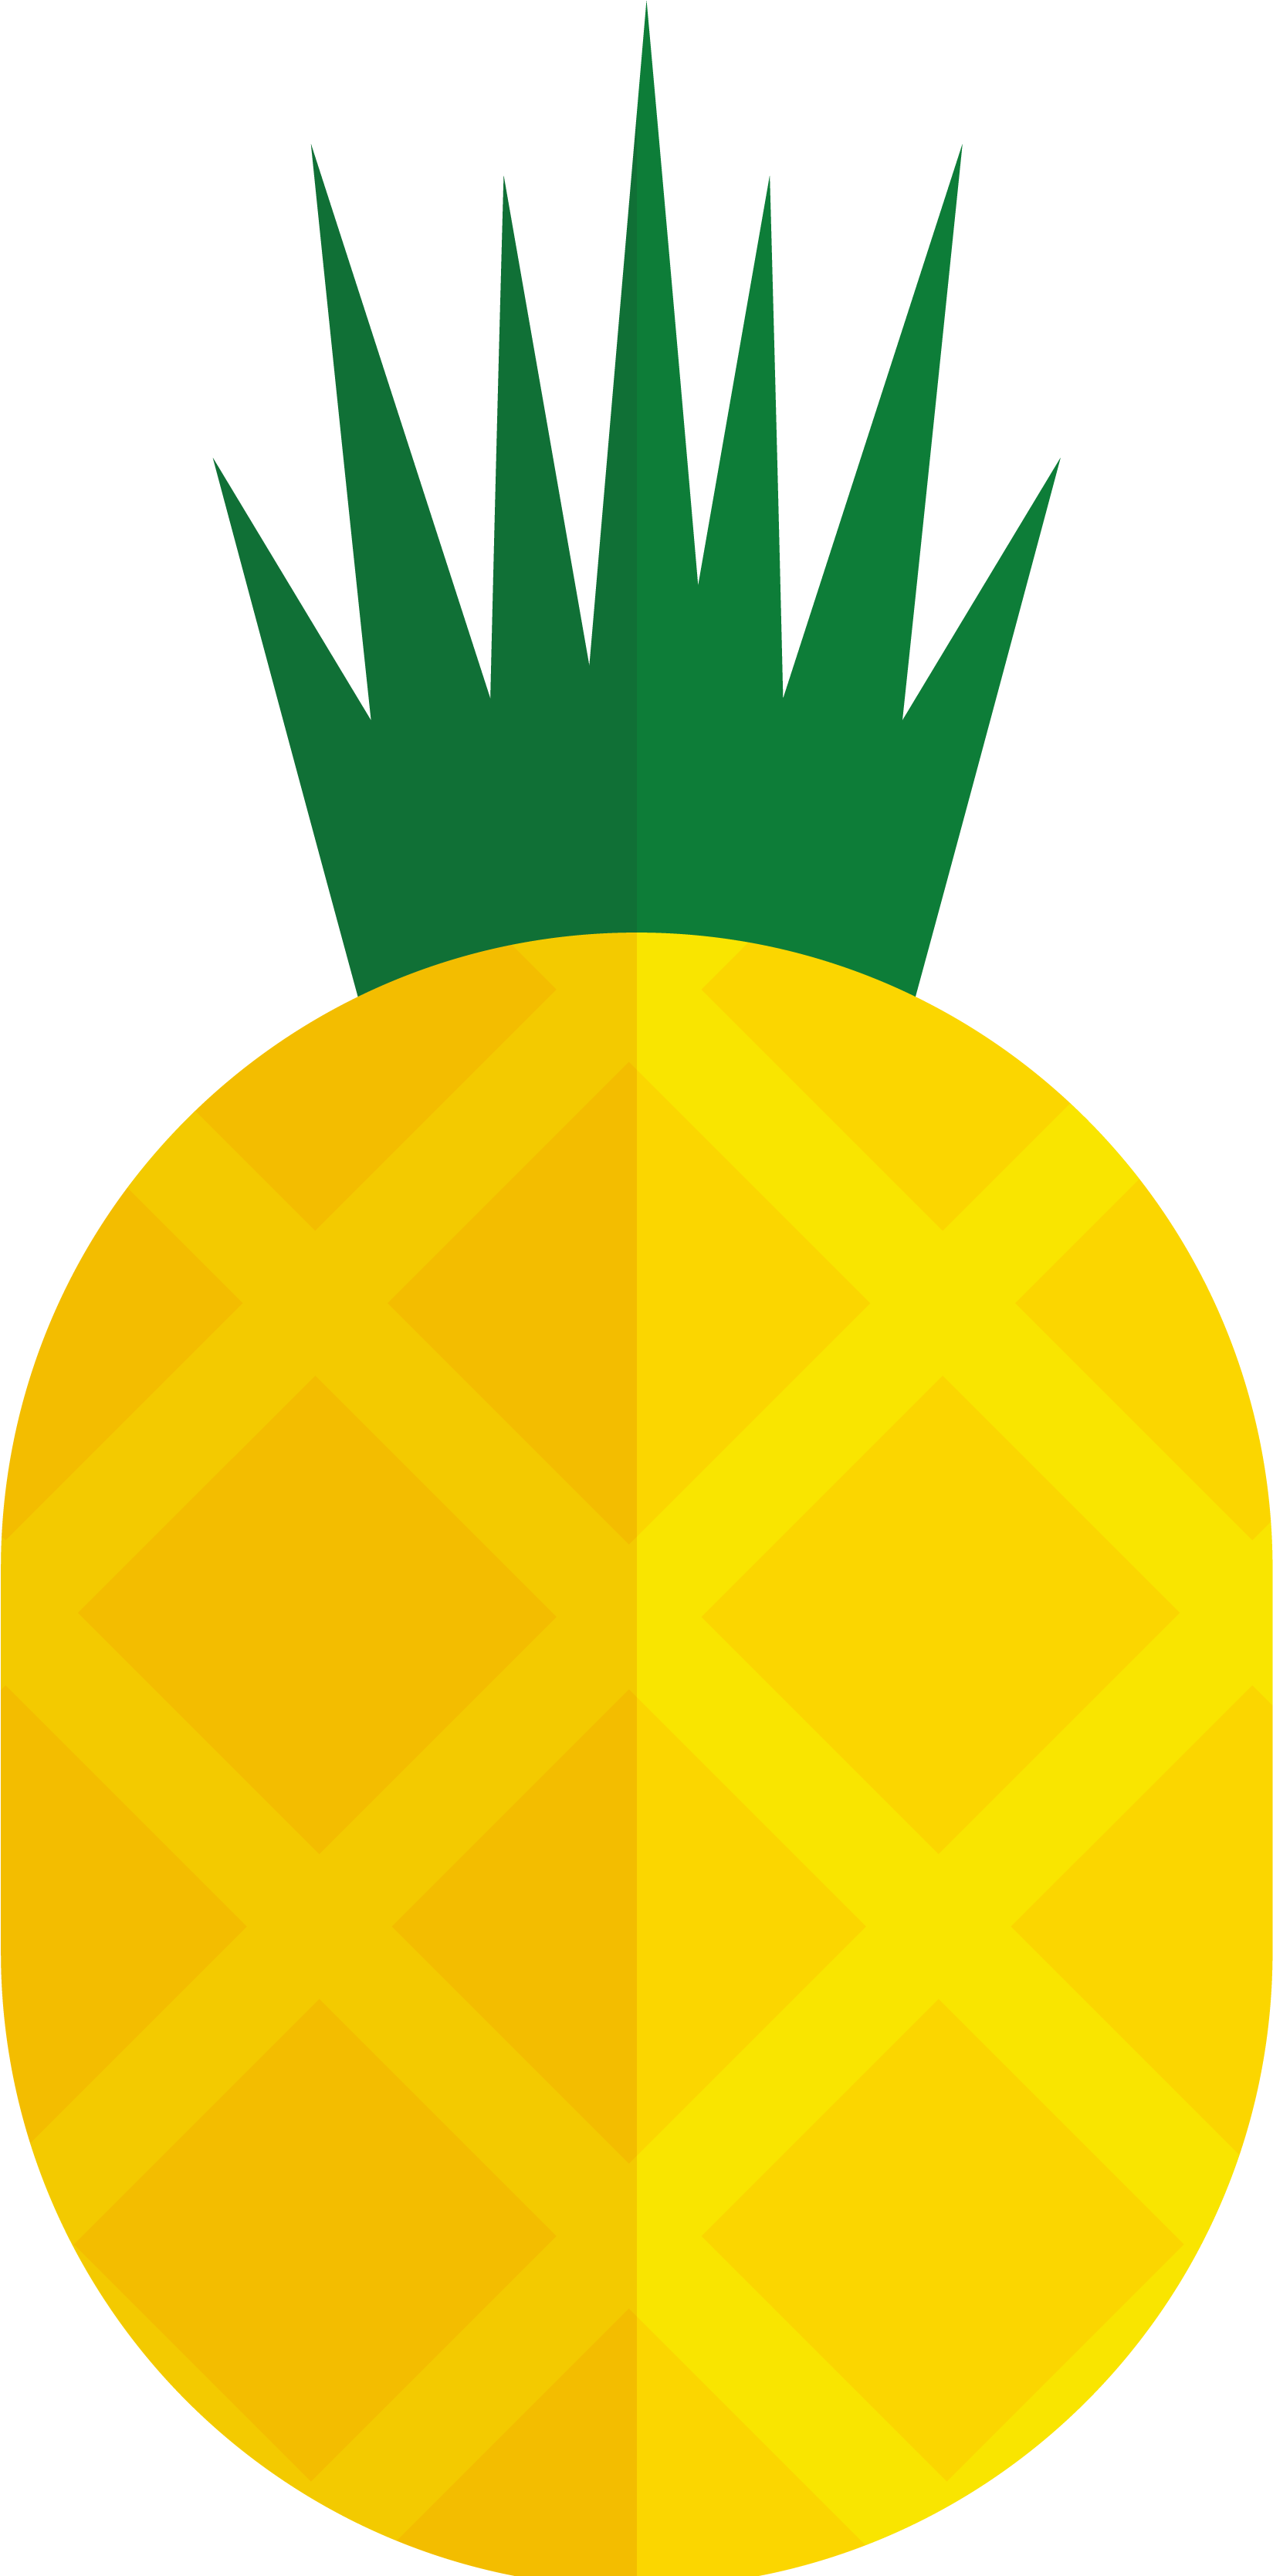 Pineapple Fruit Auglis - Pineapple (2730x3336)